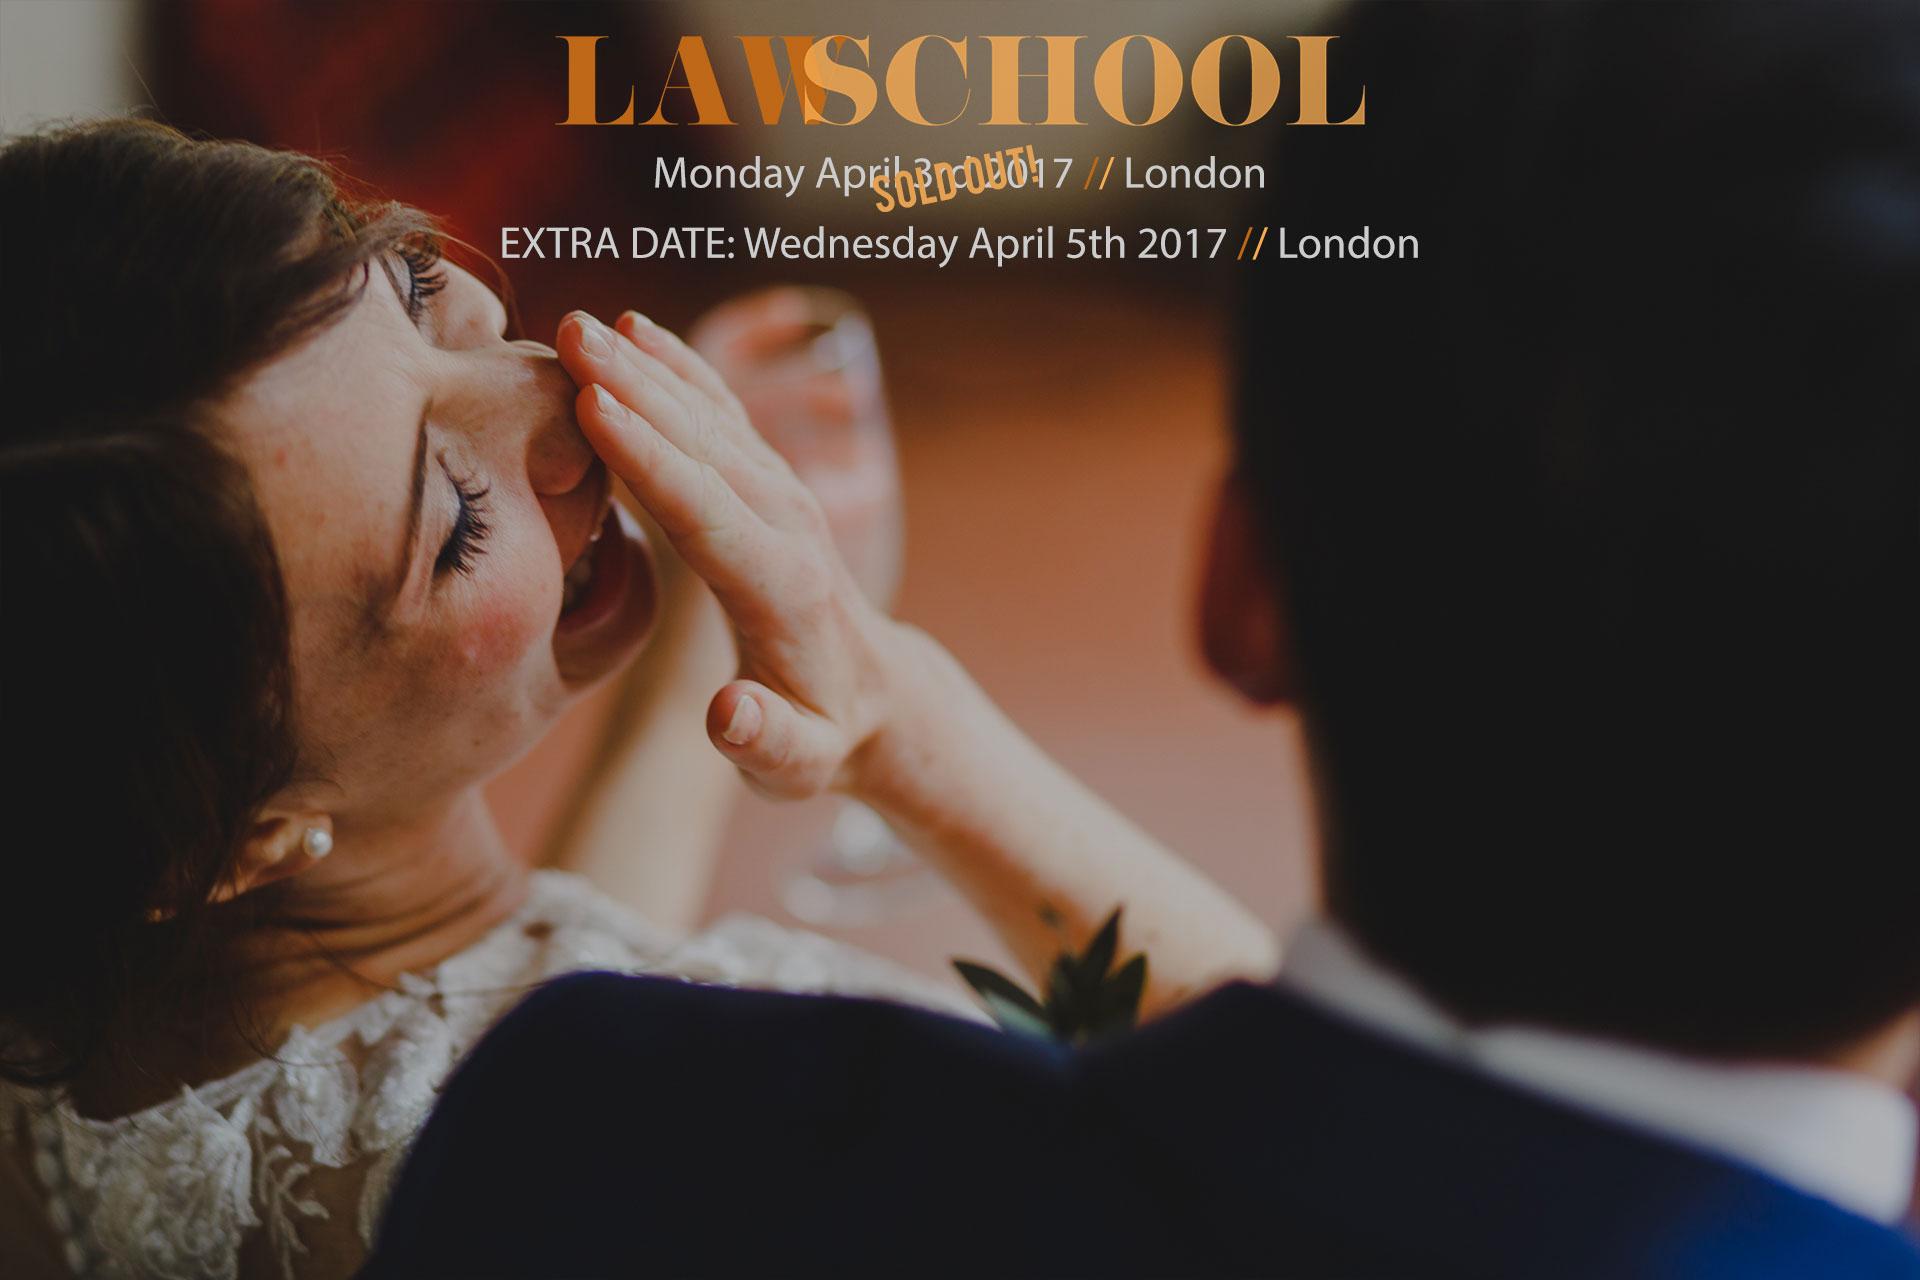 Law School / Wedding Photography Workshop / April 5th 2017 / London, UK